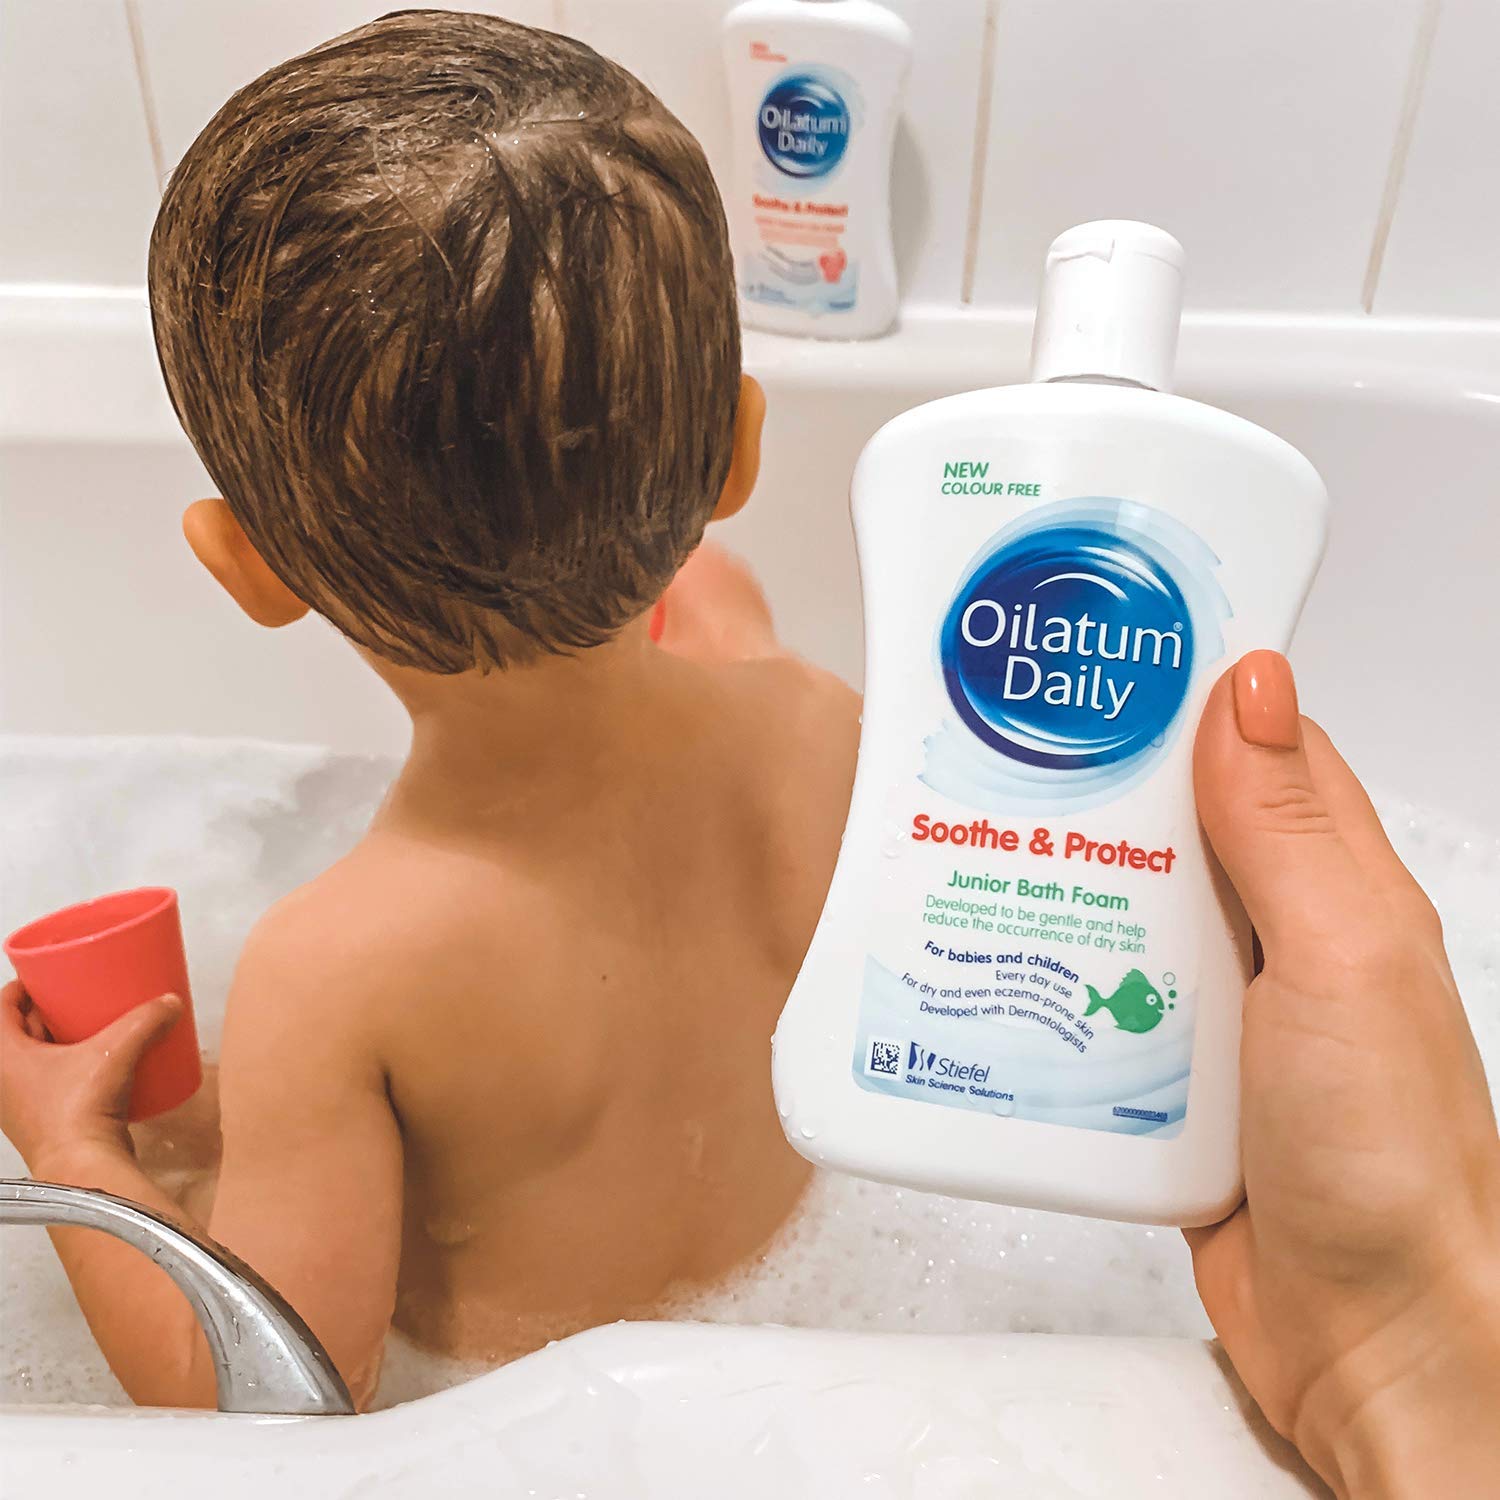 Oilatum Daily Junior Bath Foam for Dry Skin, 300 ml : Beauty & Personal Care